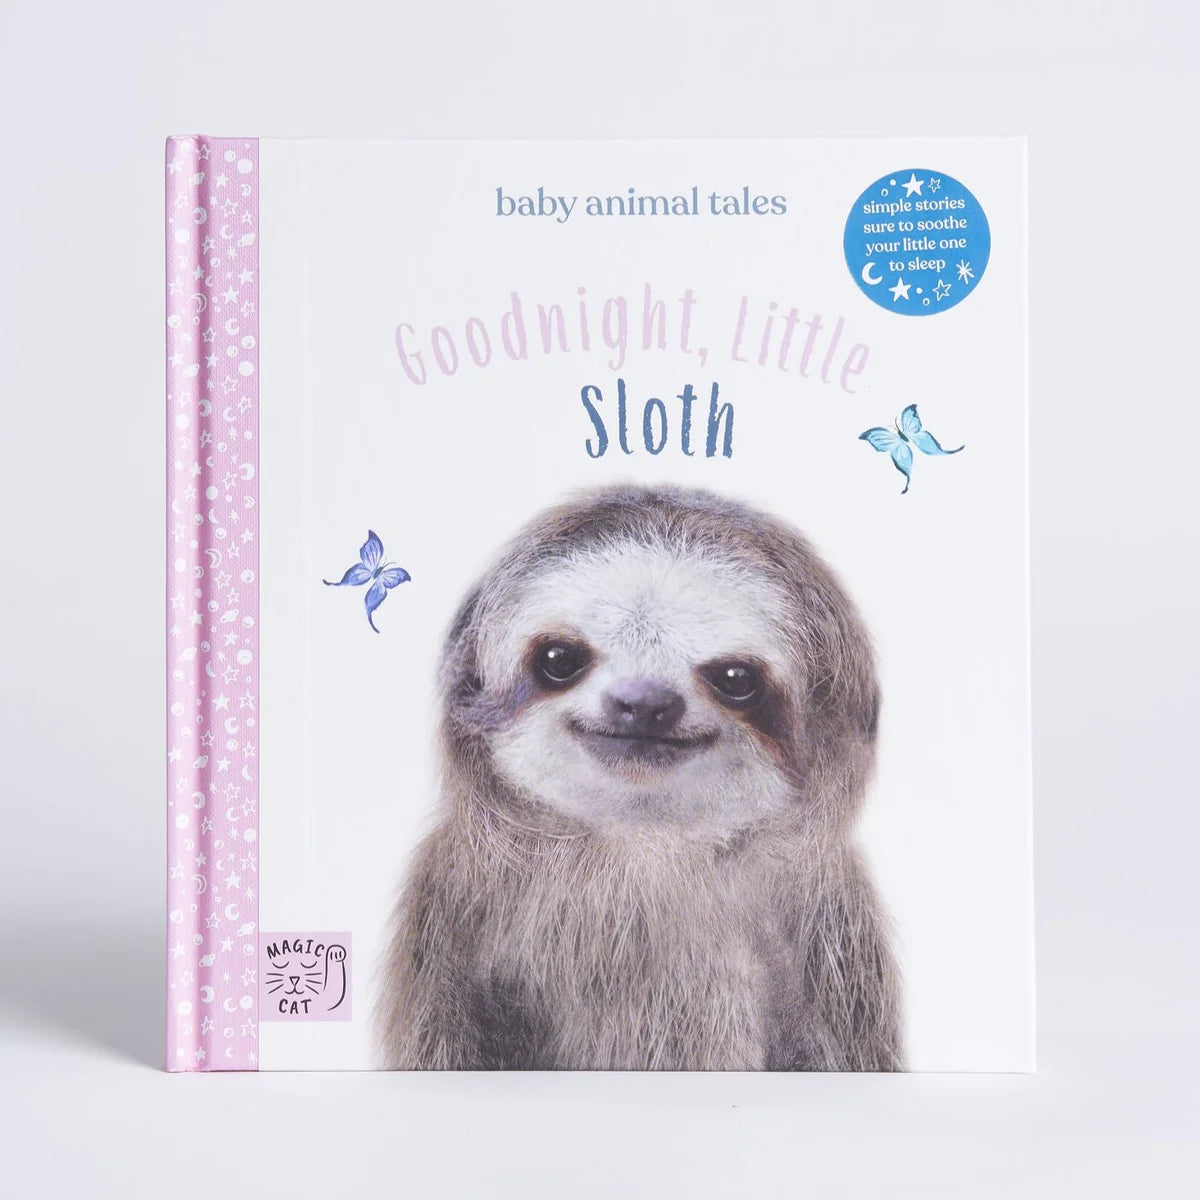 Goodnight, Little Sloth